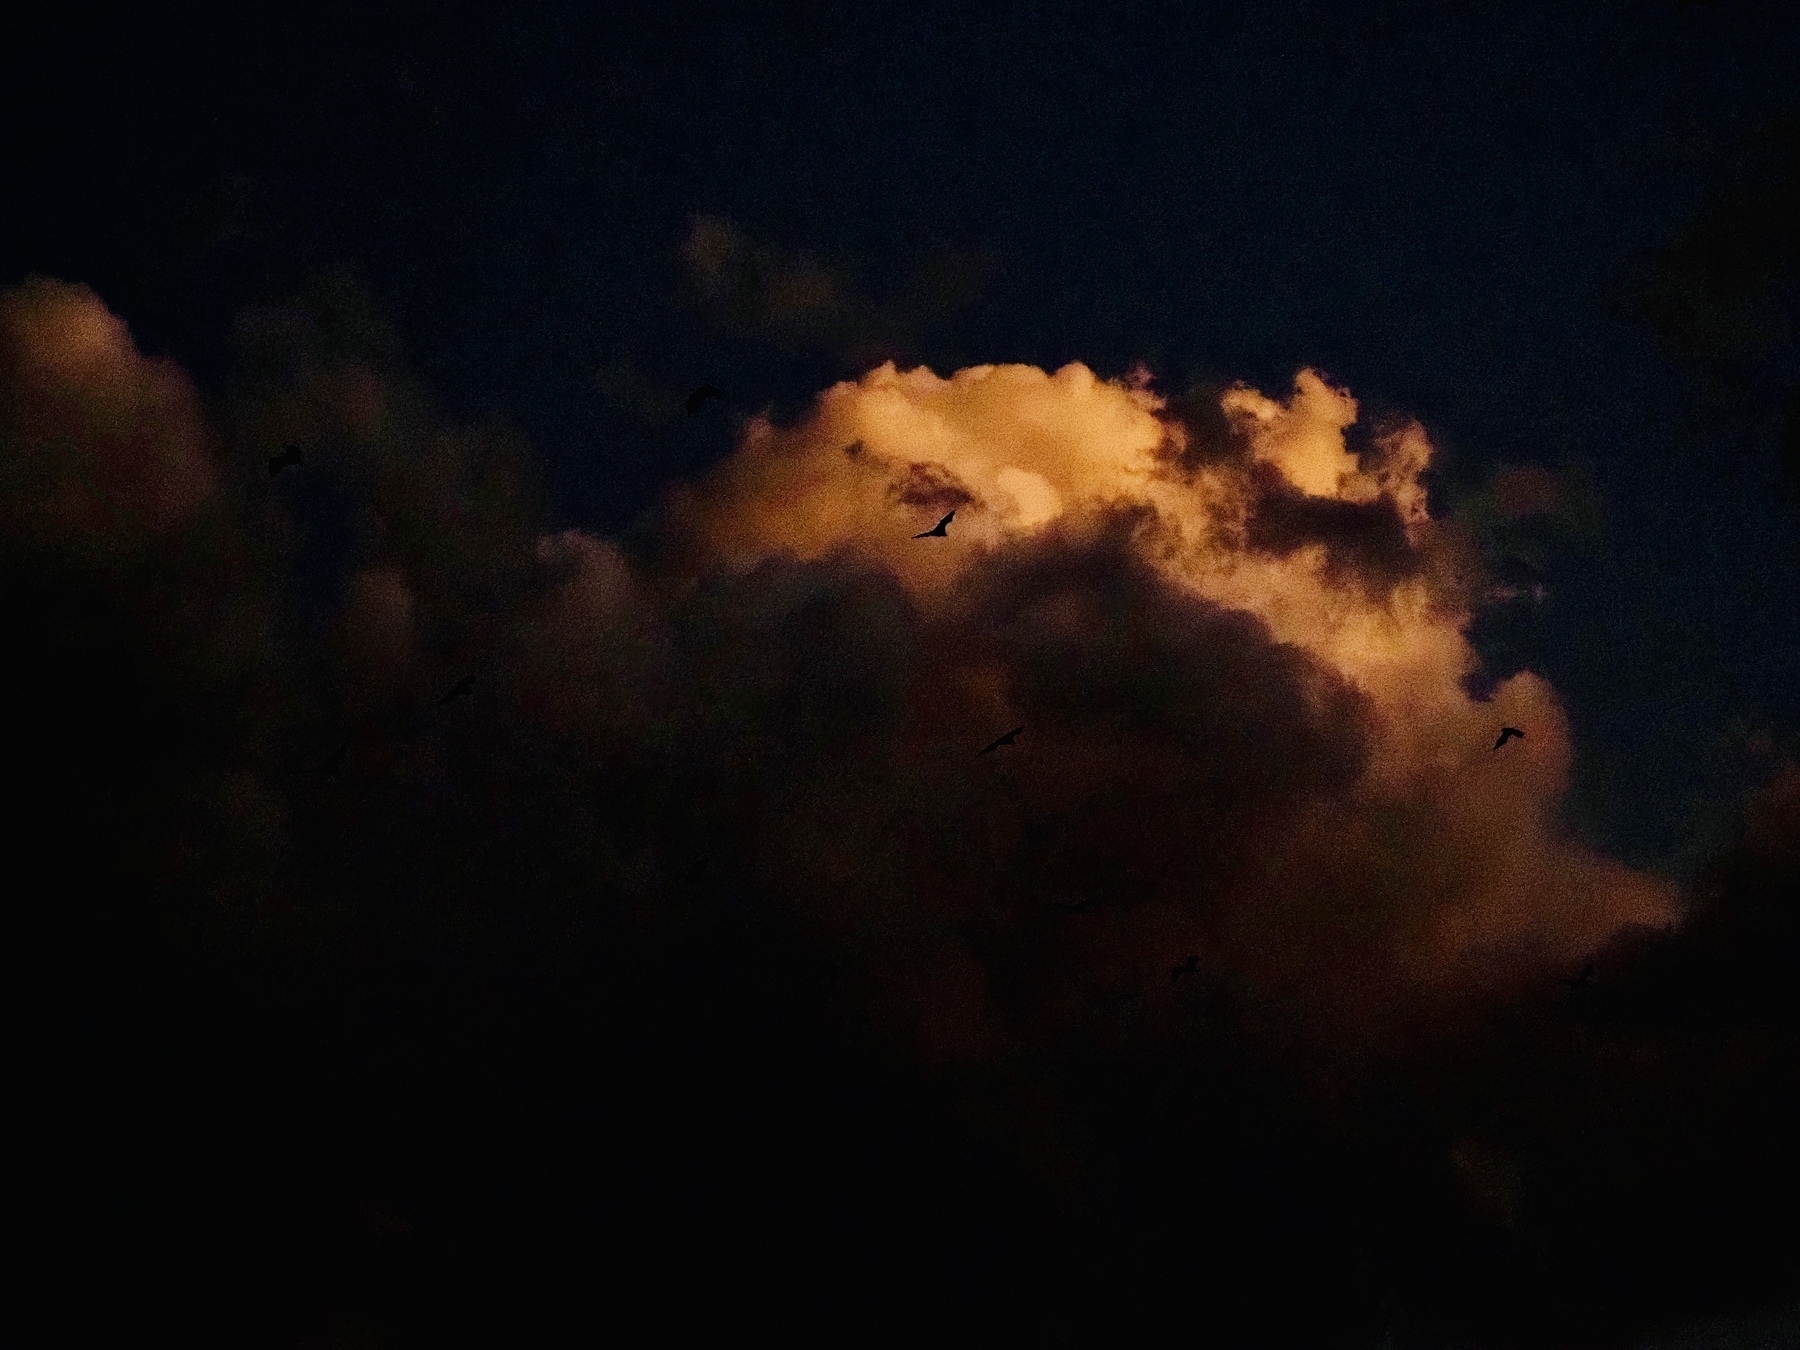 A bat against a cloudy evening sky